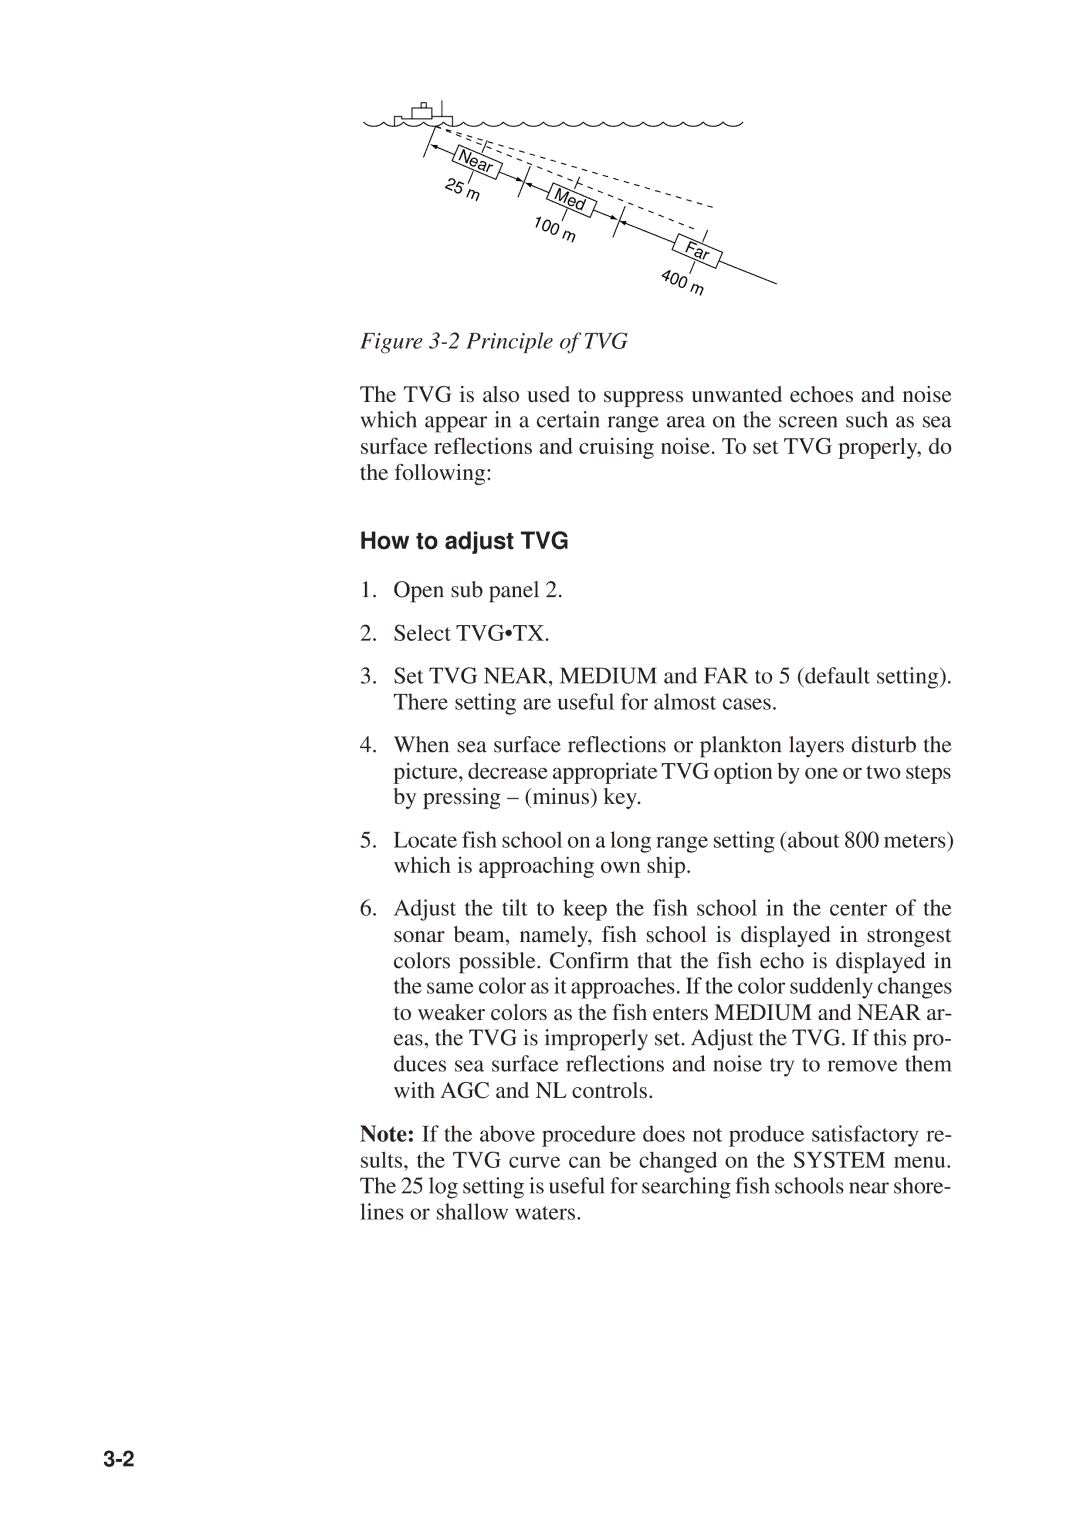 Furuno MODEL CSH-73 manual Principle of TVG, How to adjust TVG 